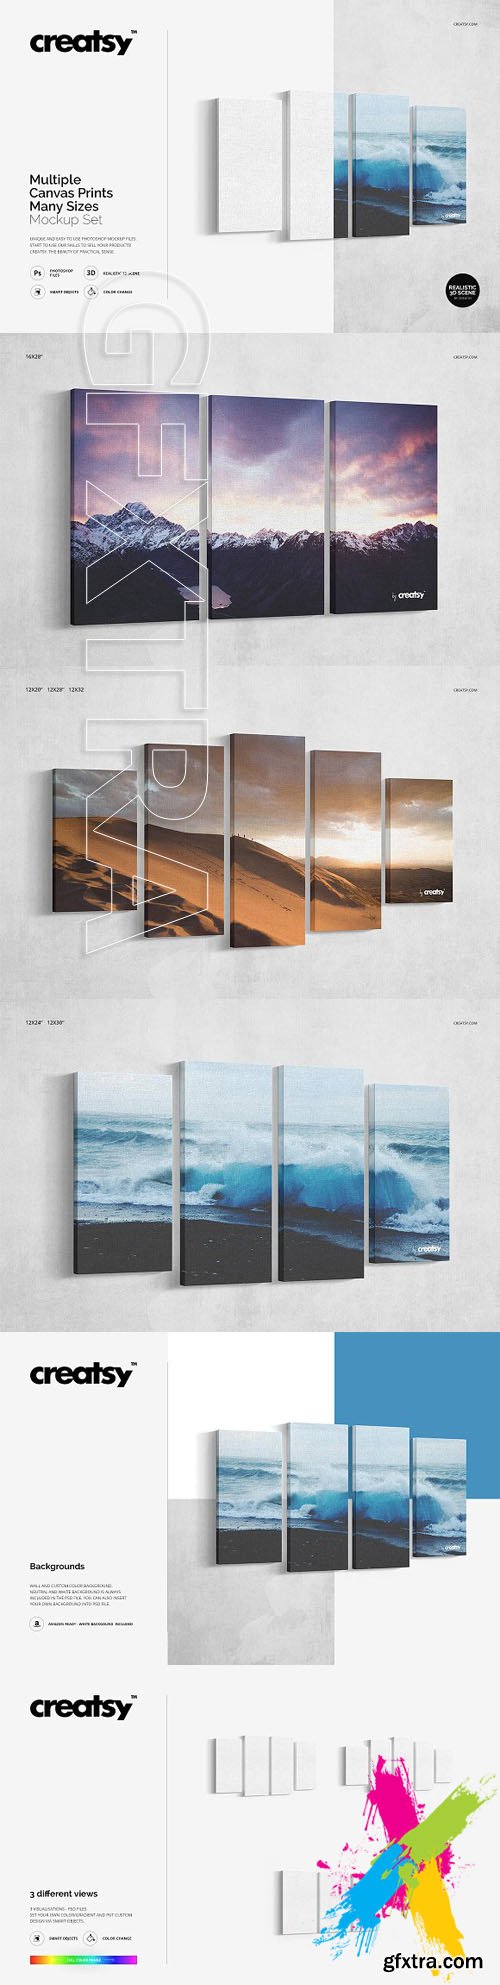 Creativemarket - Multiple Canvas Prints Mockup Set 1756158